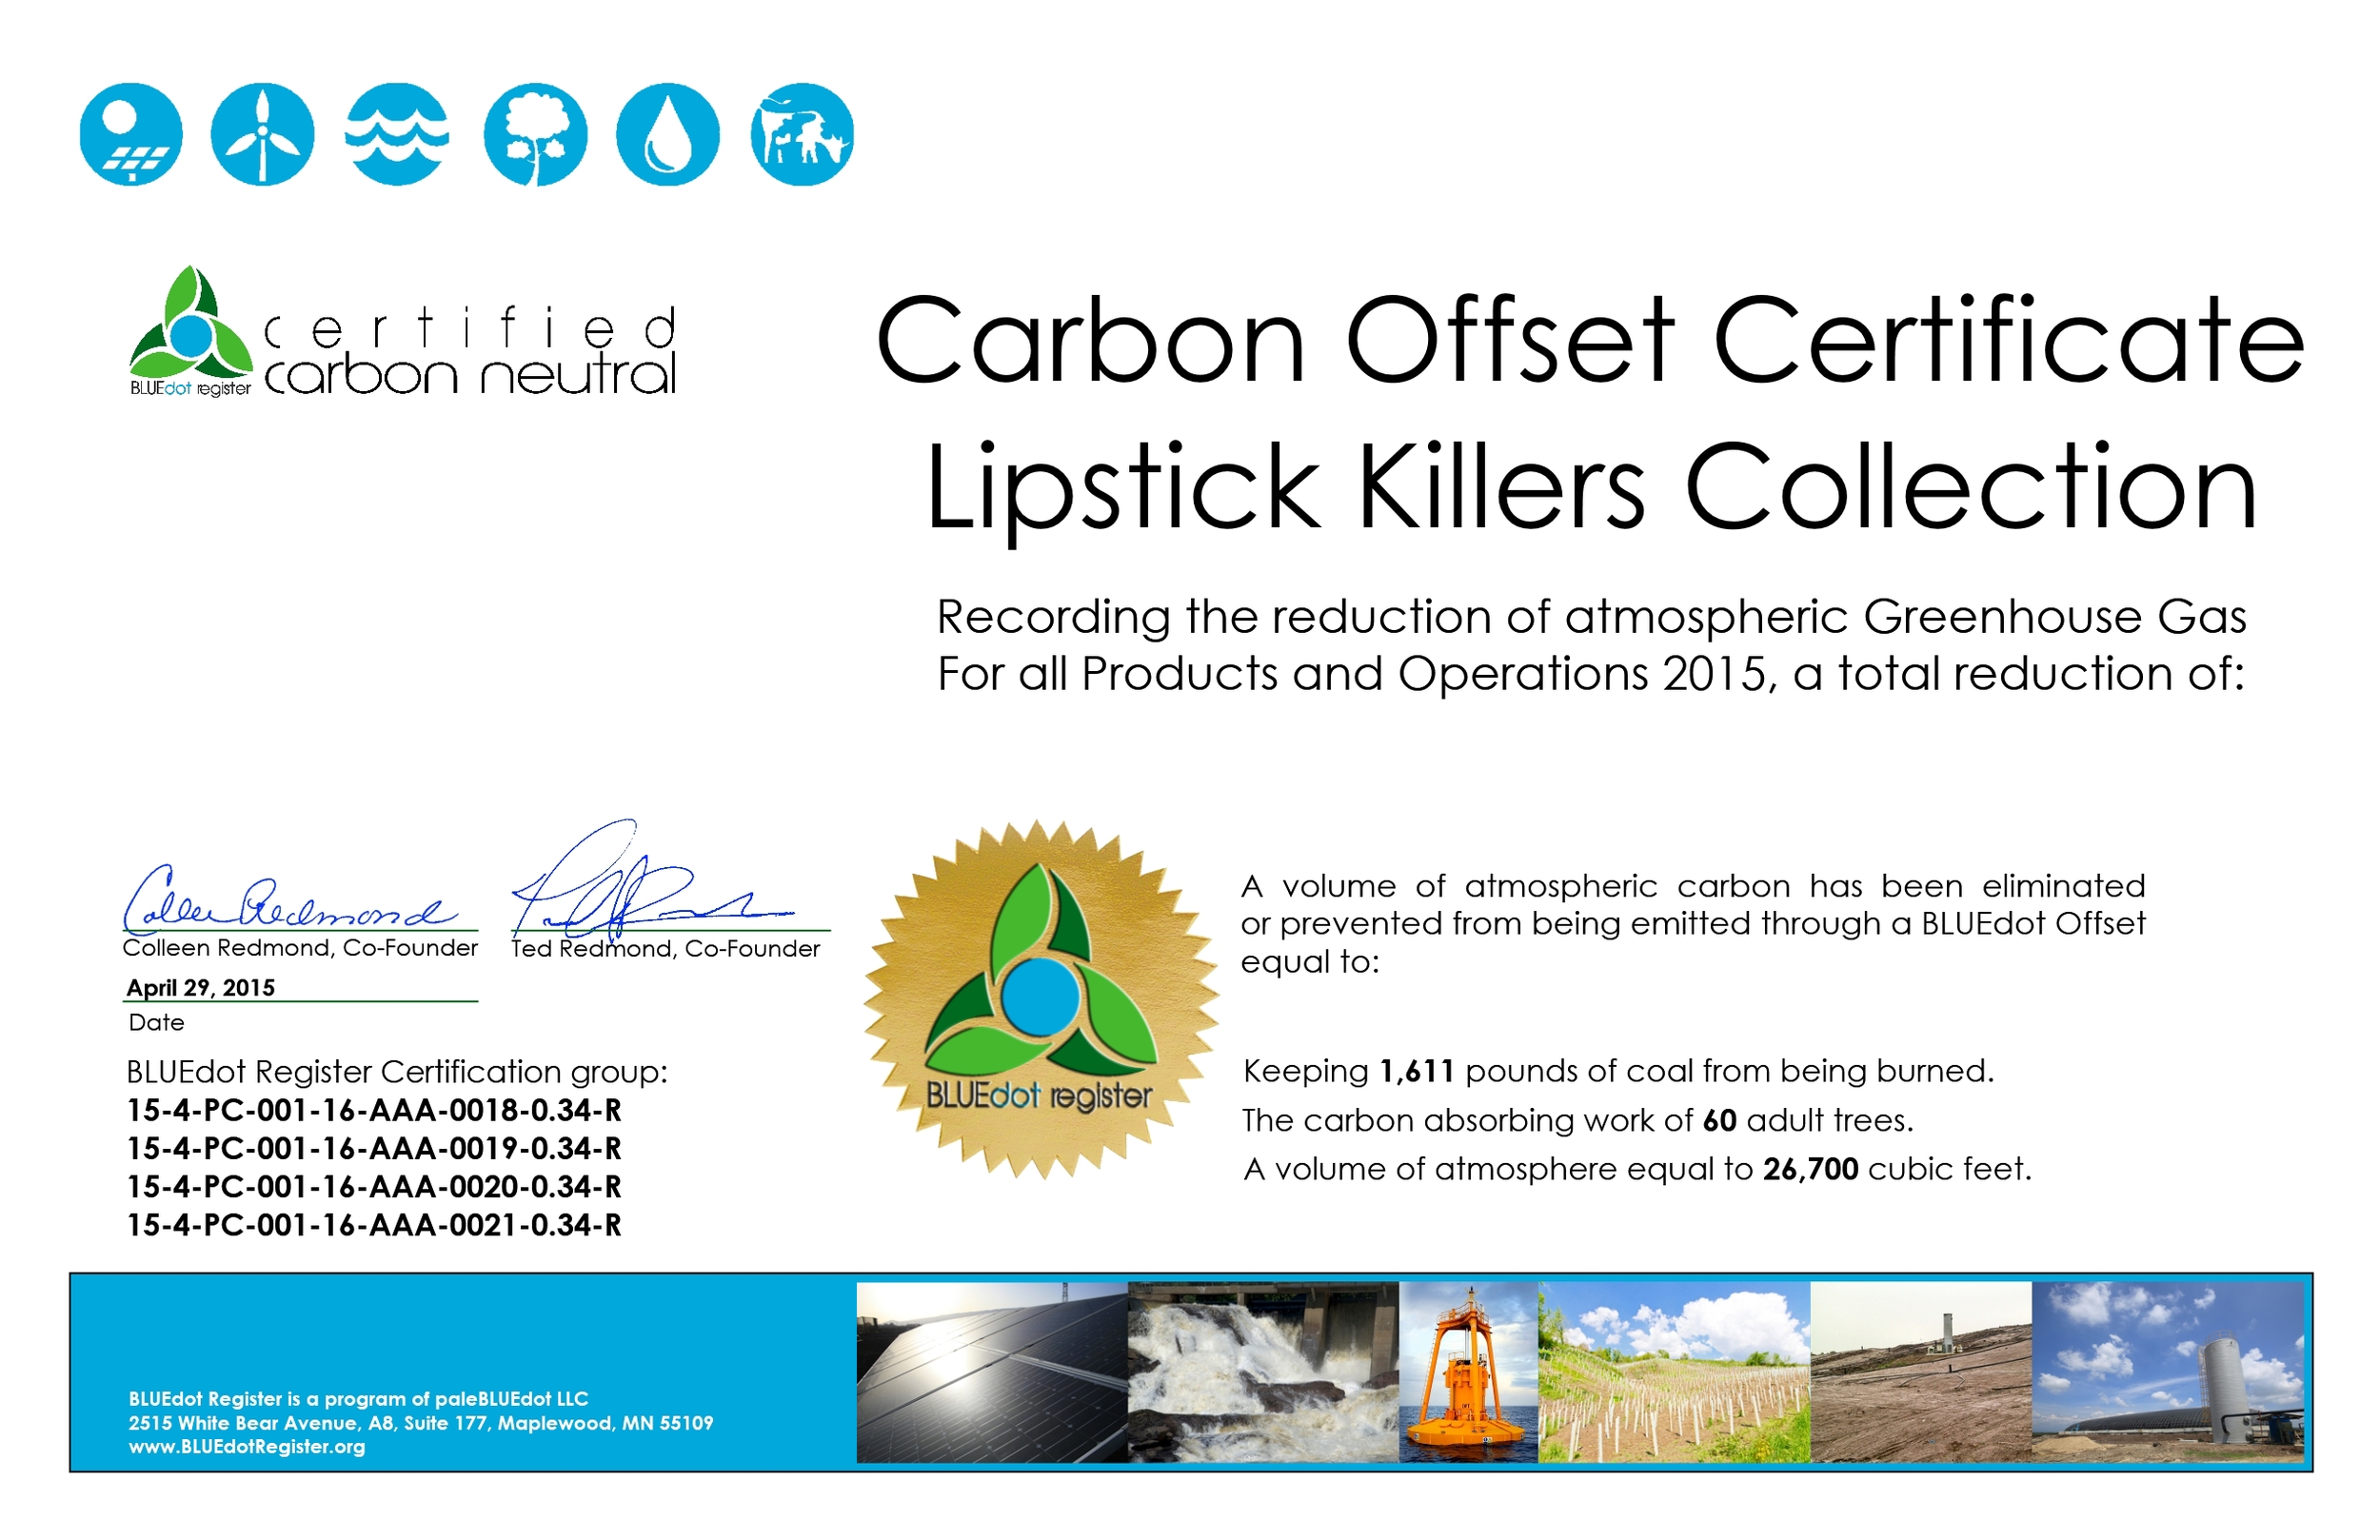 LKC Carbon Certification Data